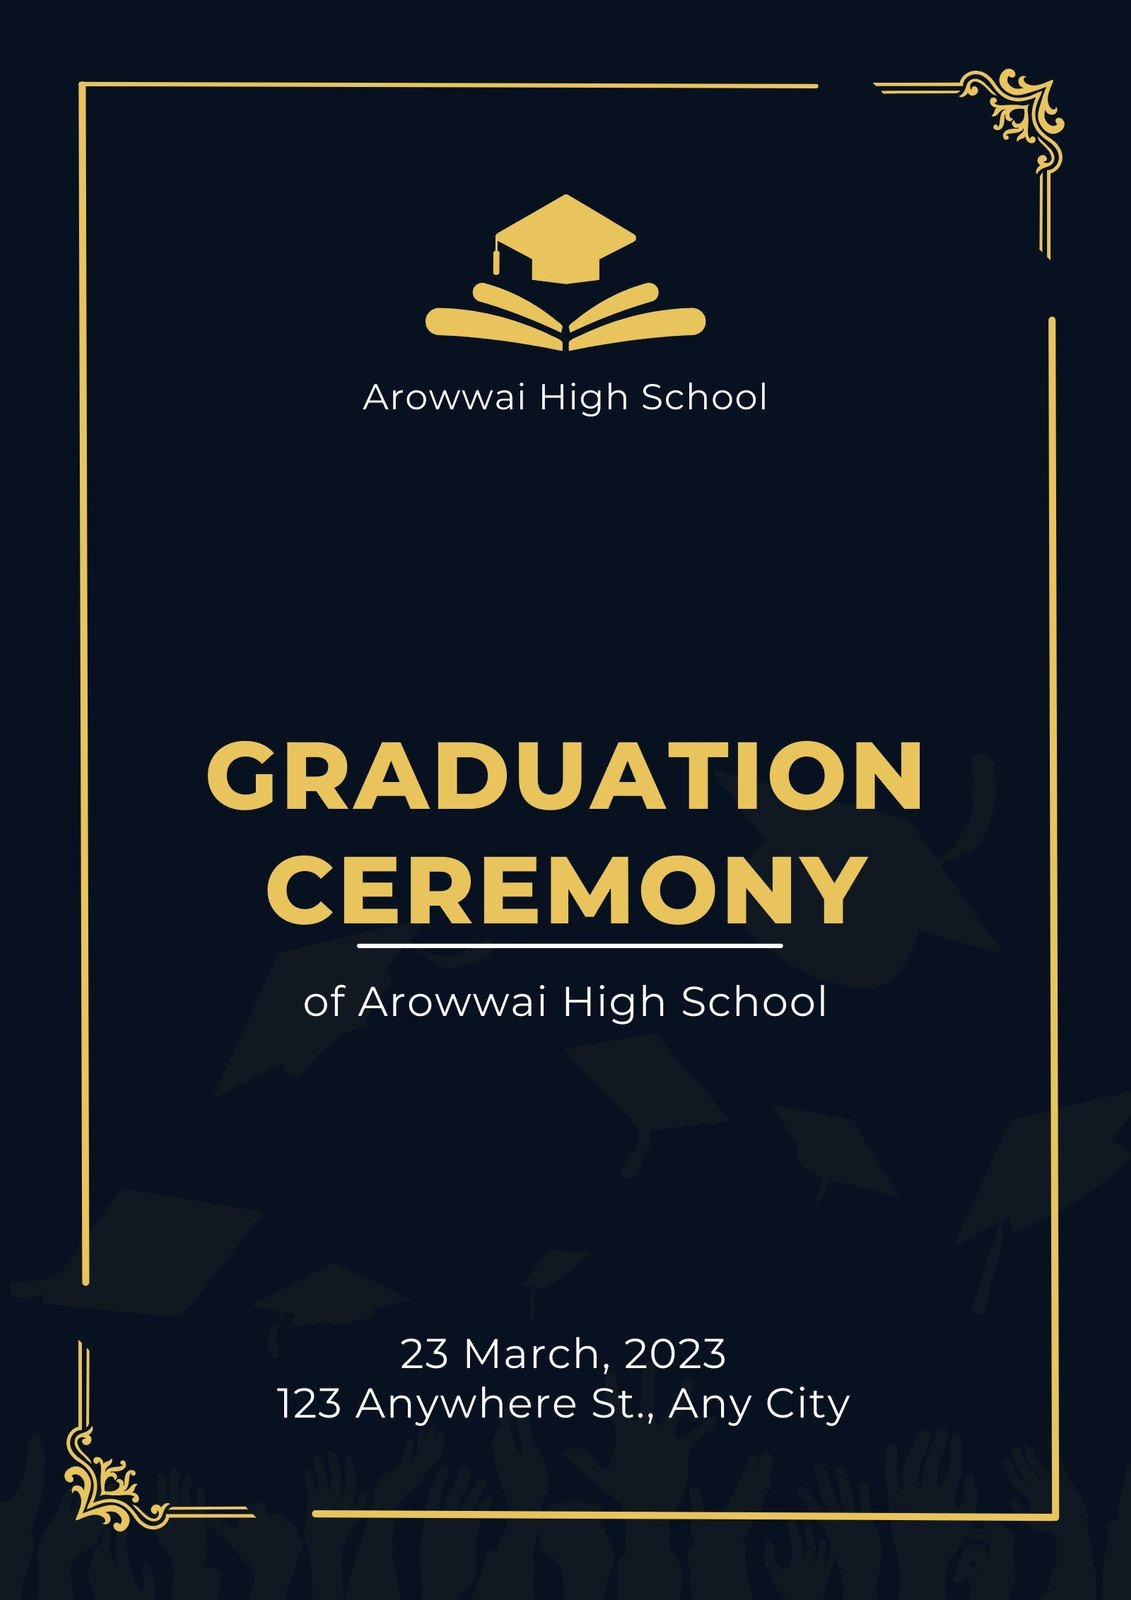 high school graduation program cover